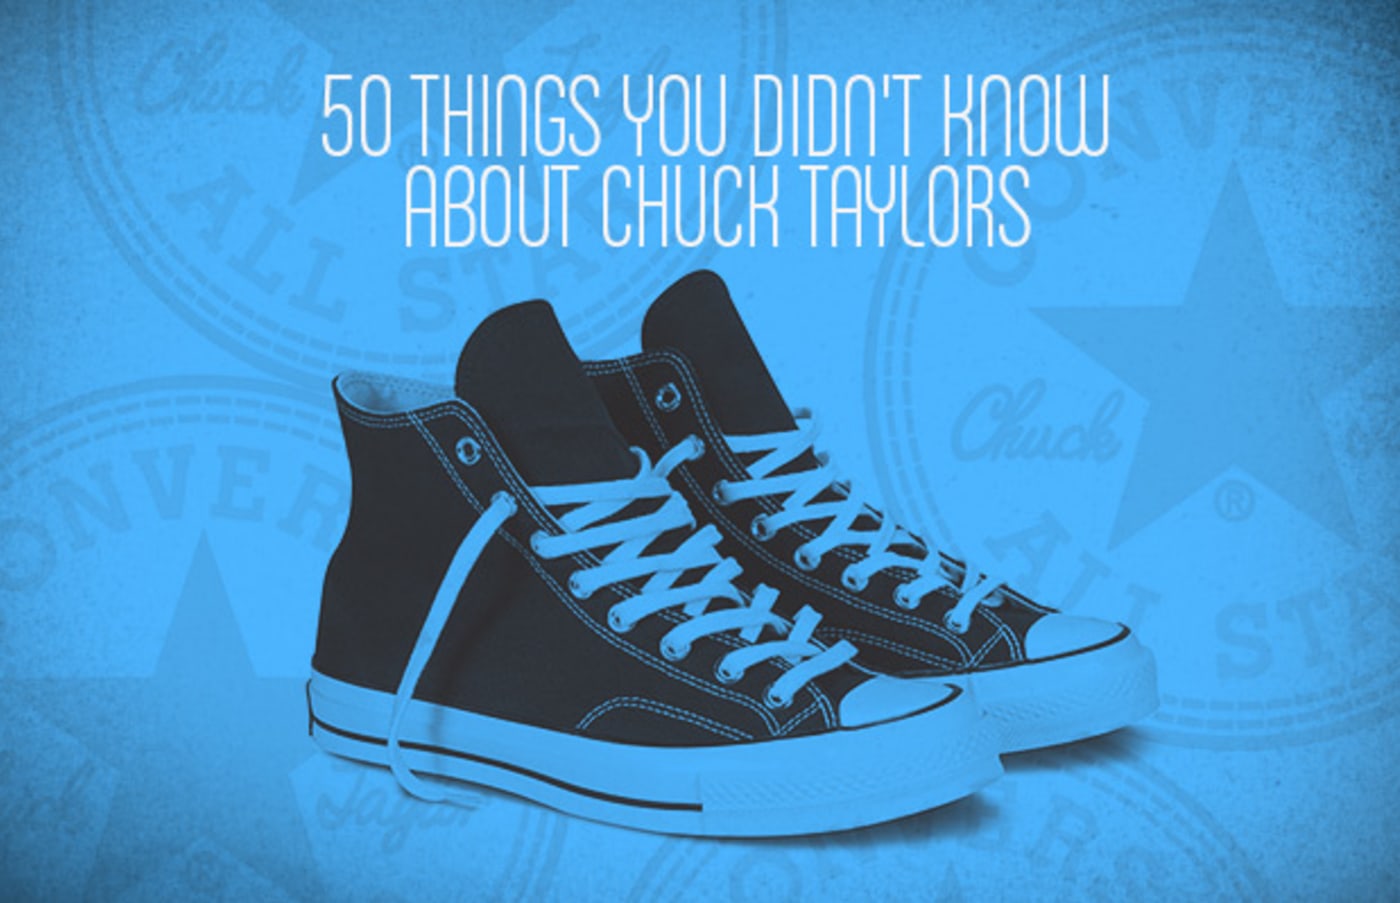 converse chuck taylor all star basketball shoes